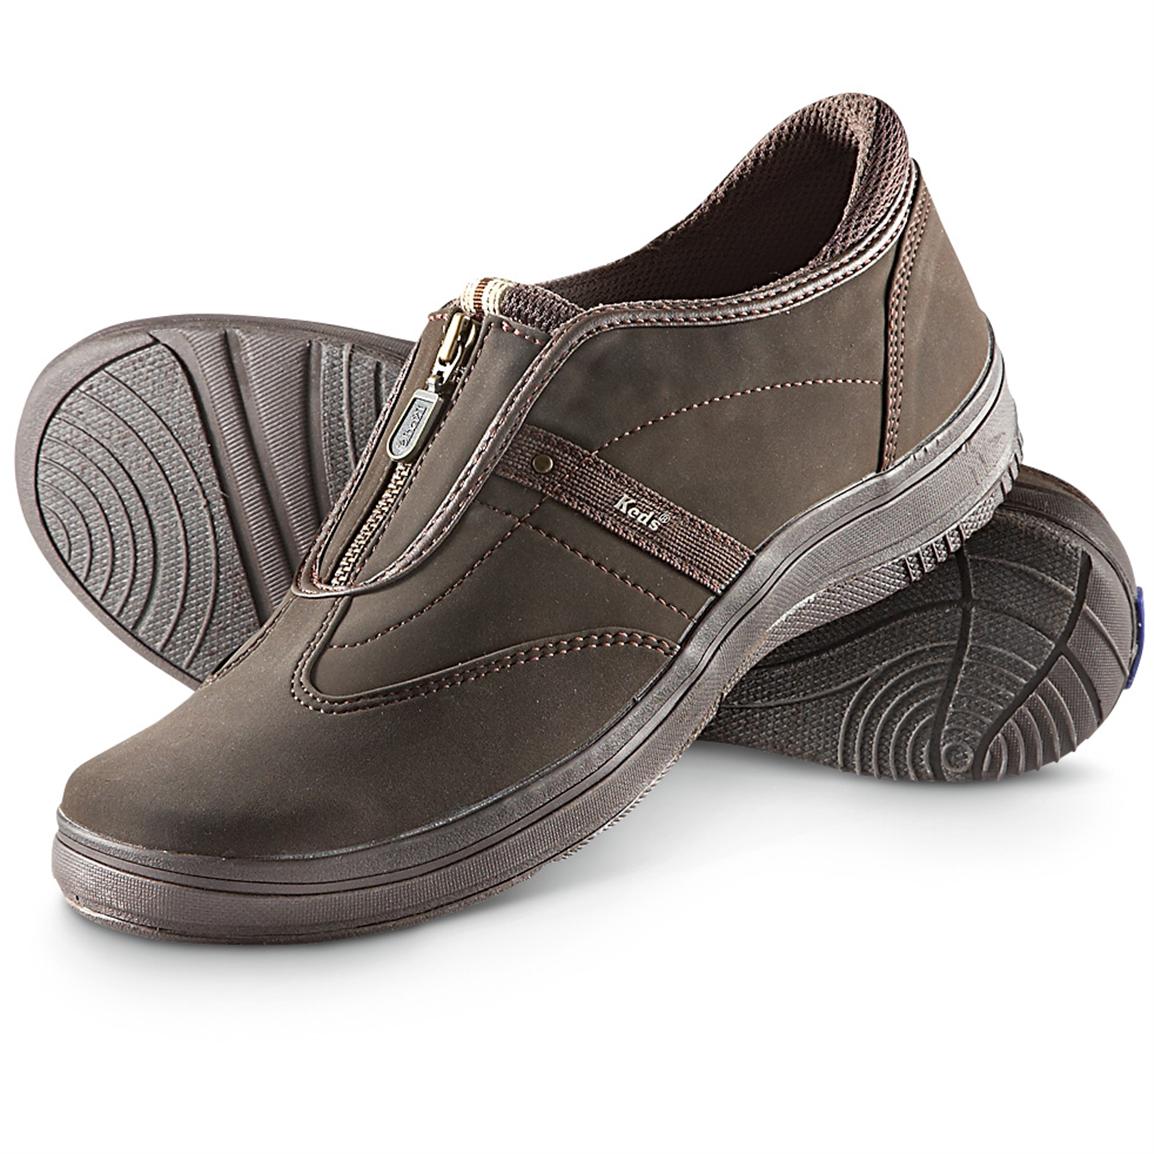 Women's Keds® Zippy Slip on Shoes, Brown 219676